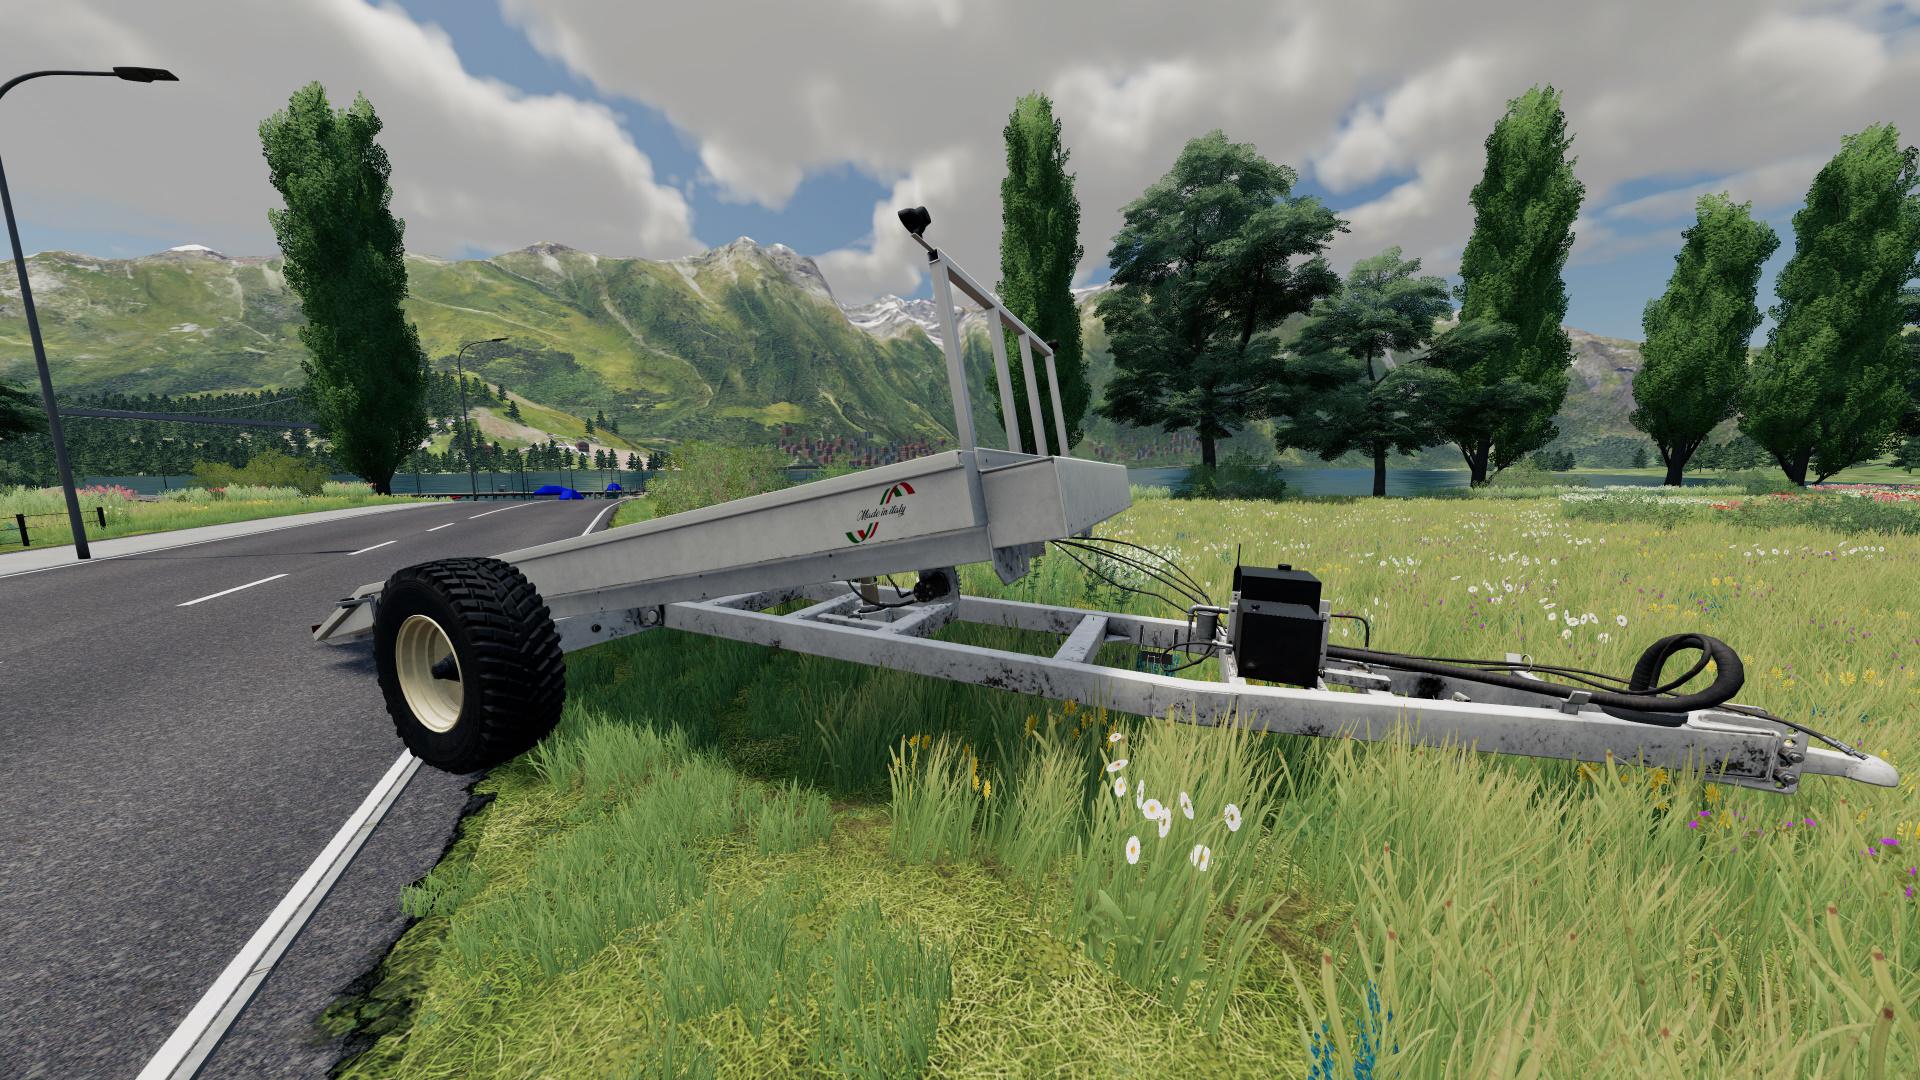 car hauling trailer for farming simulator 19